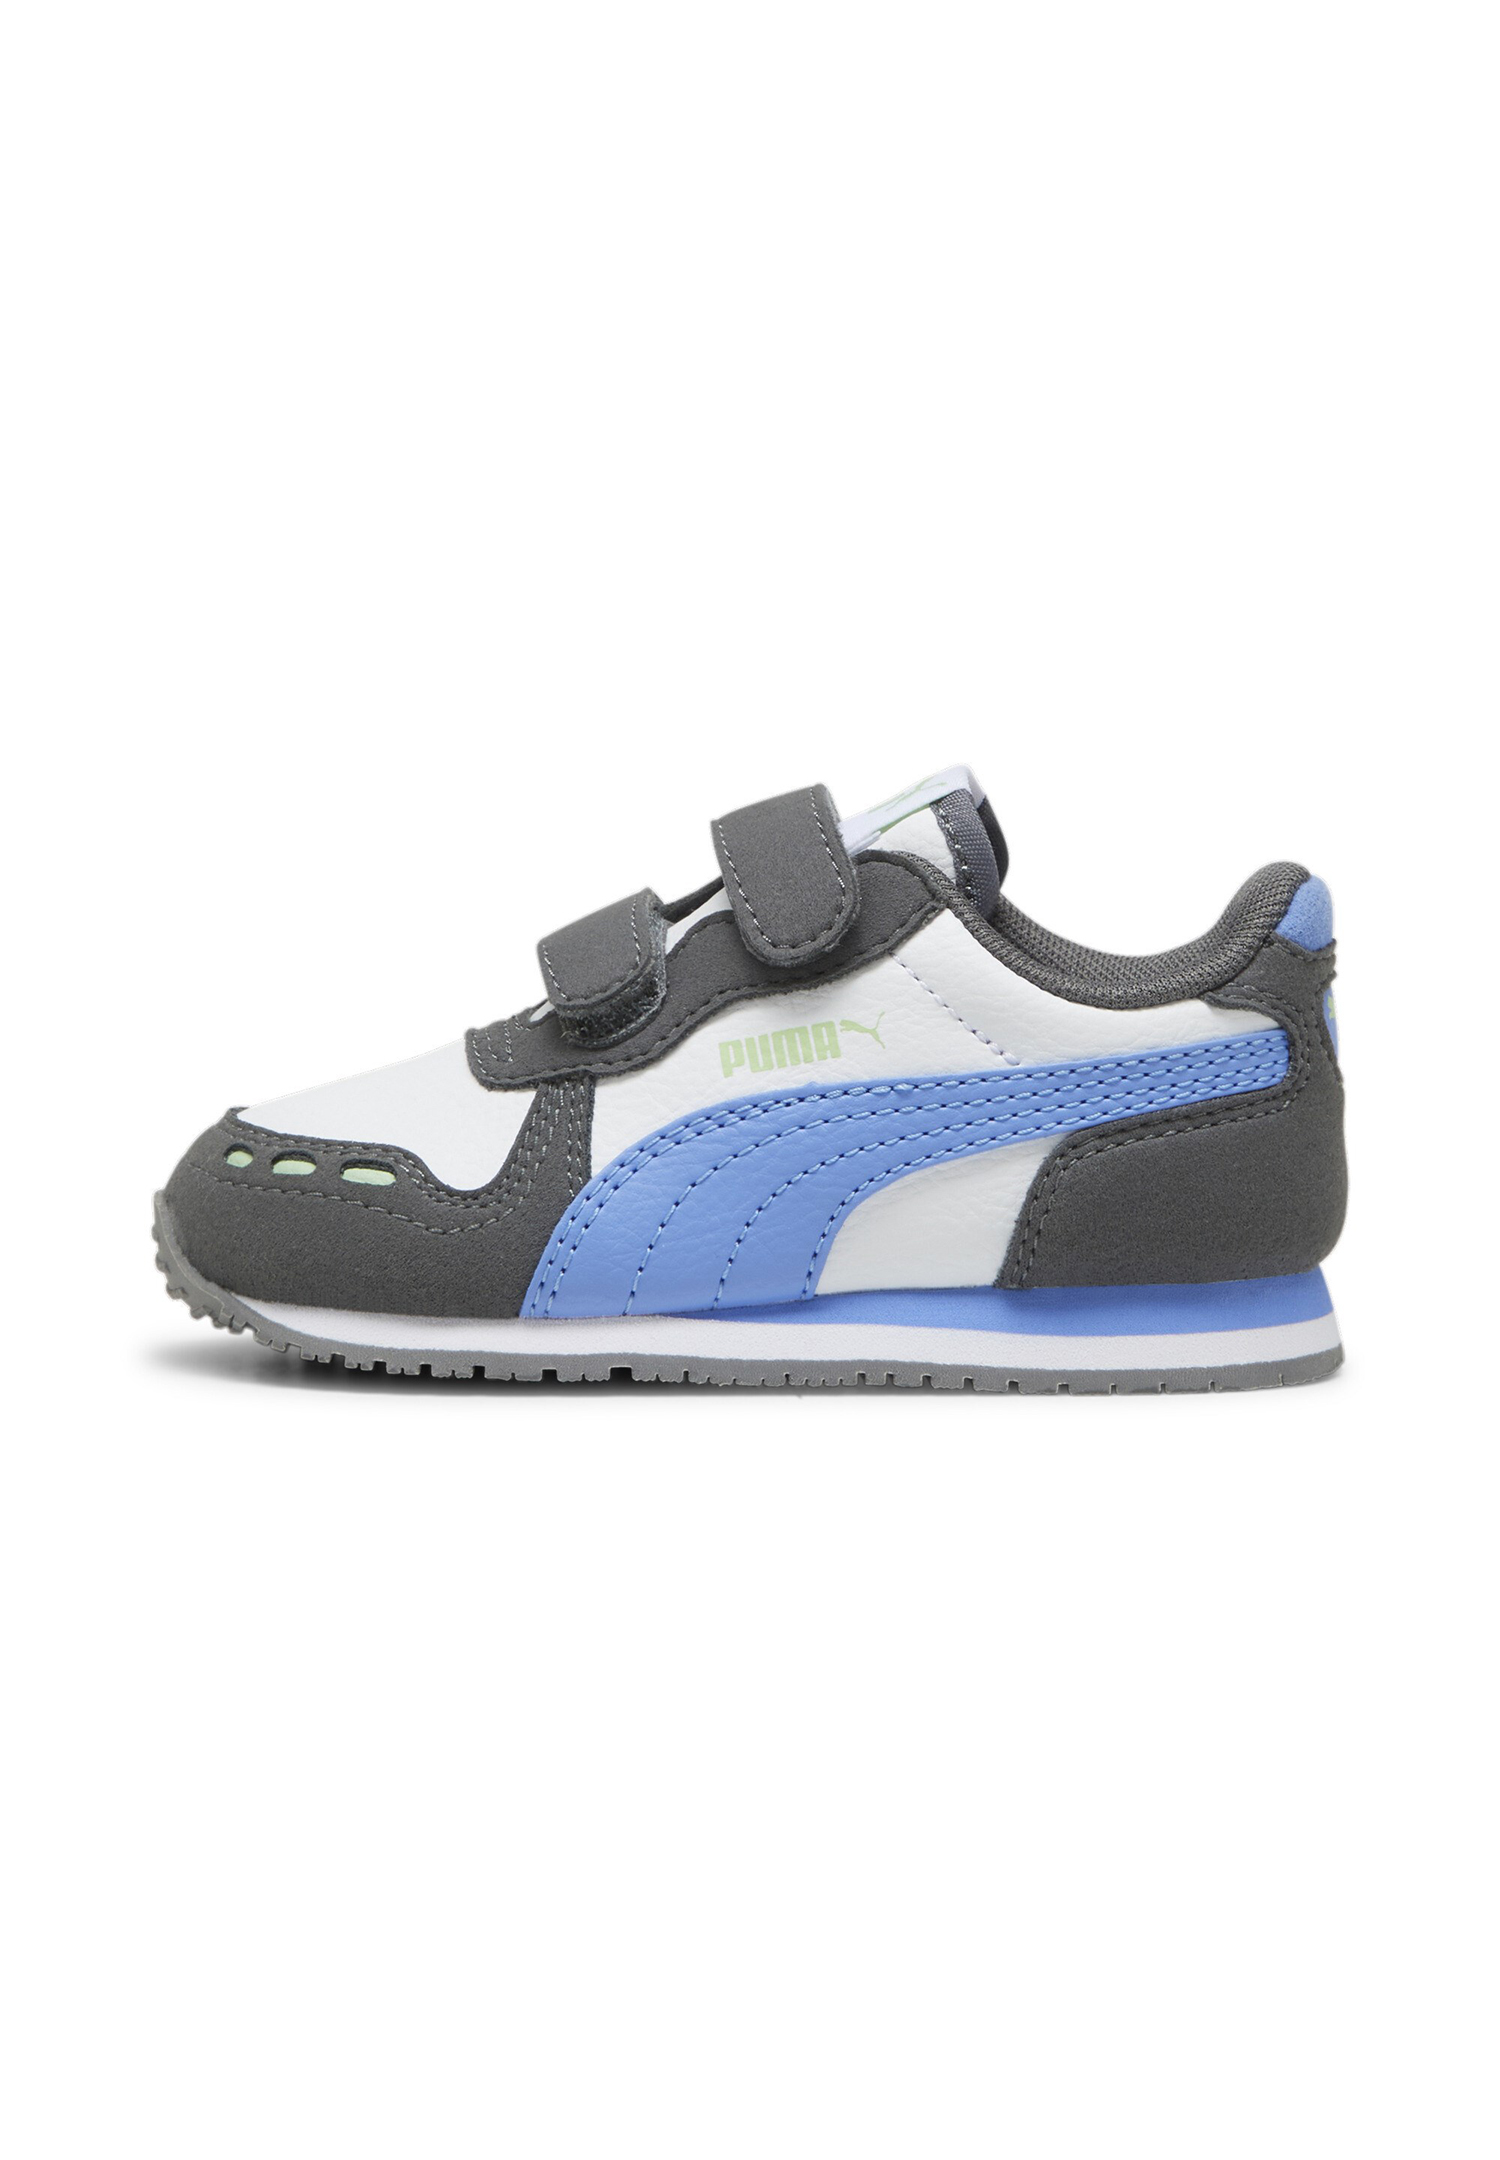 PUMA Cabana Racer SL 20 V Inf Kinder Sneaker Turnschuhe 383731 15 grau/blau/weiß